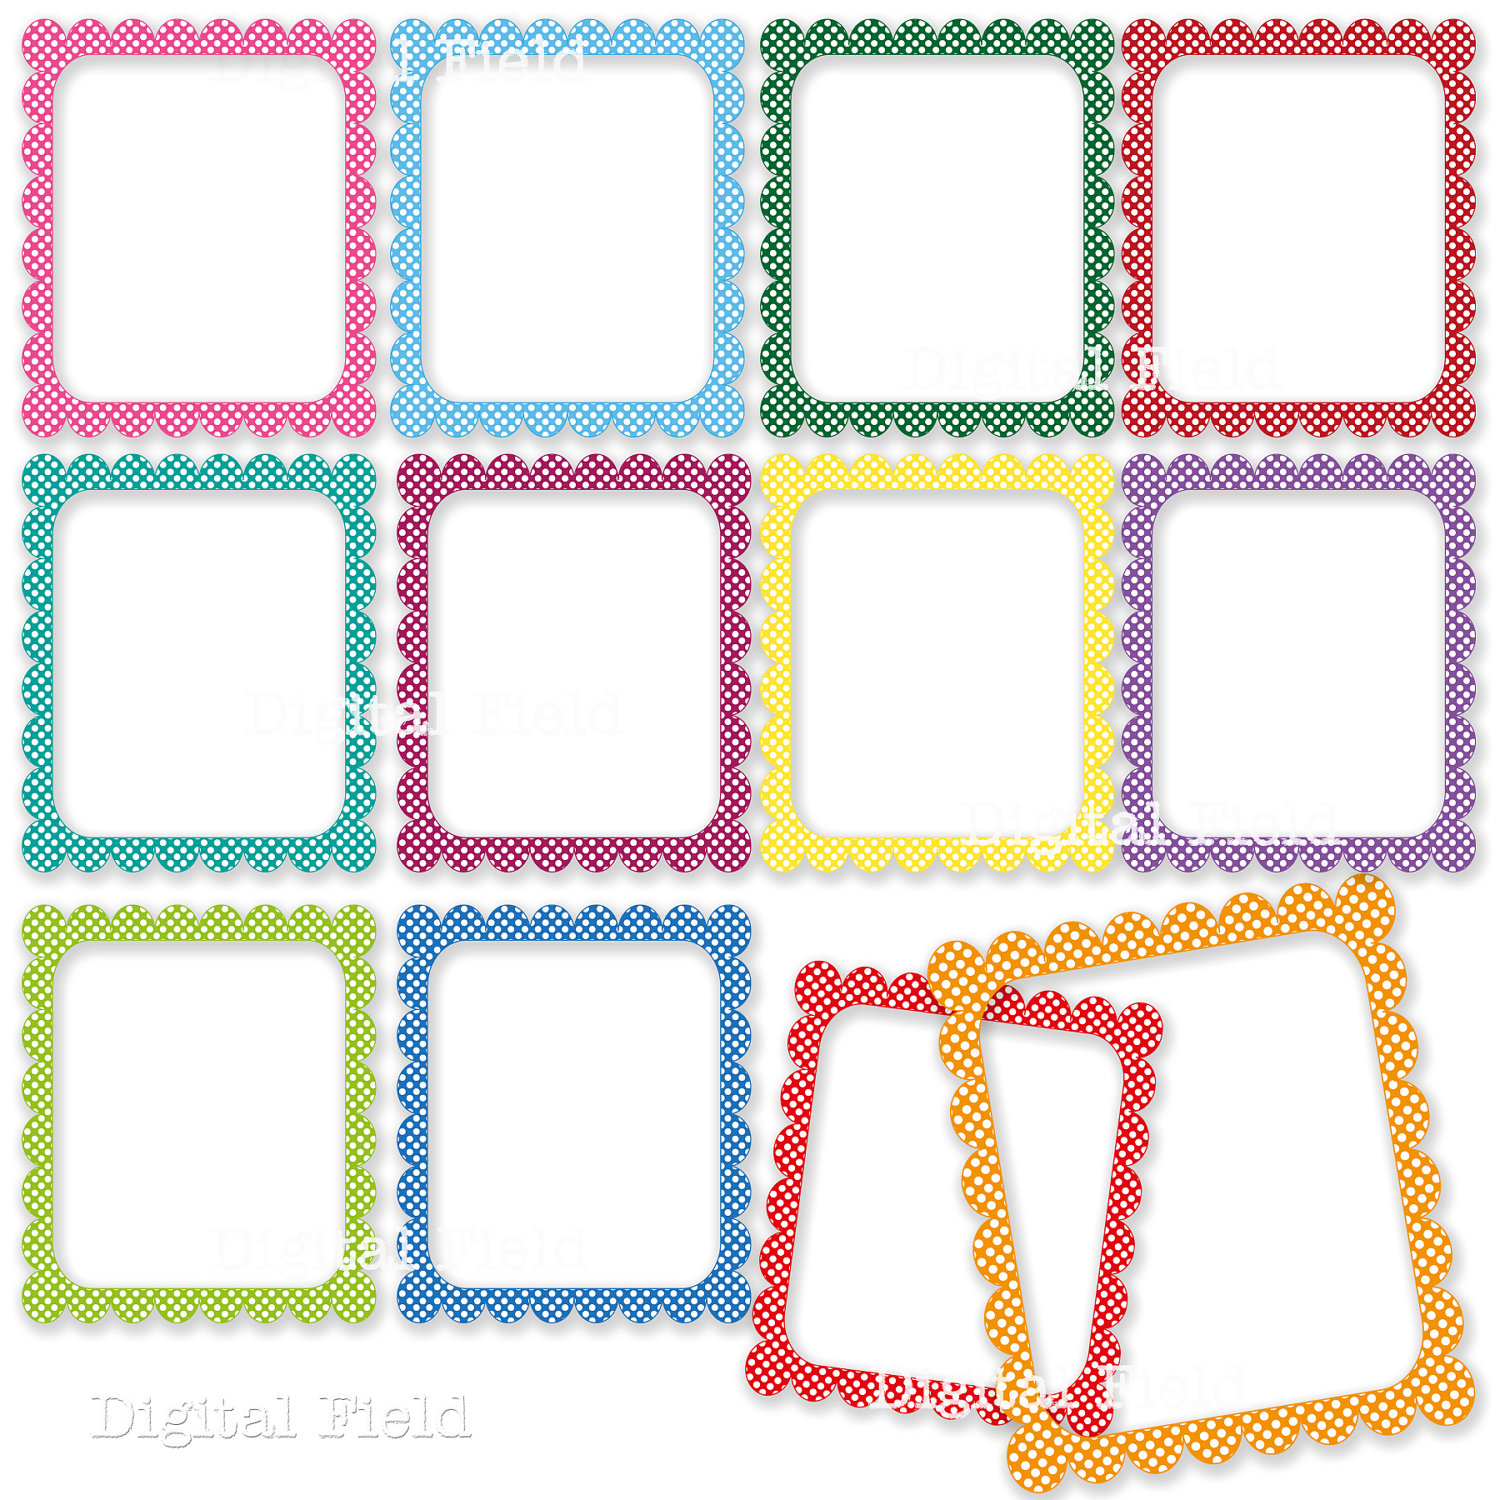 Colorful Polka Dot Digital Frames Clip Art Set By Digitalfield